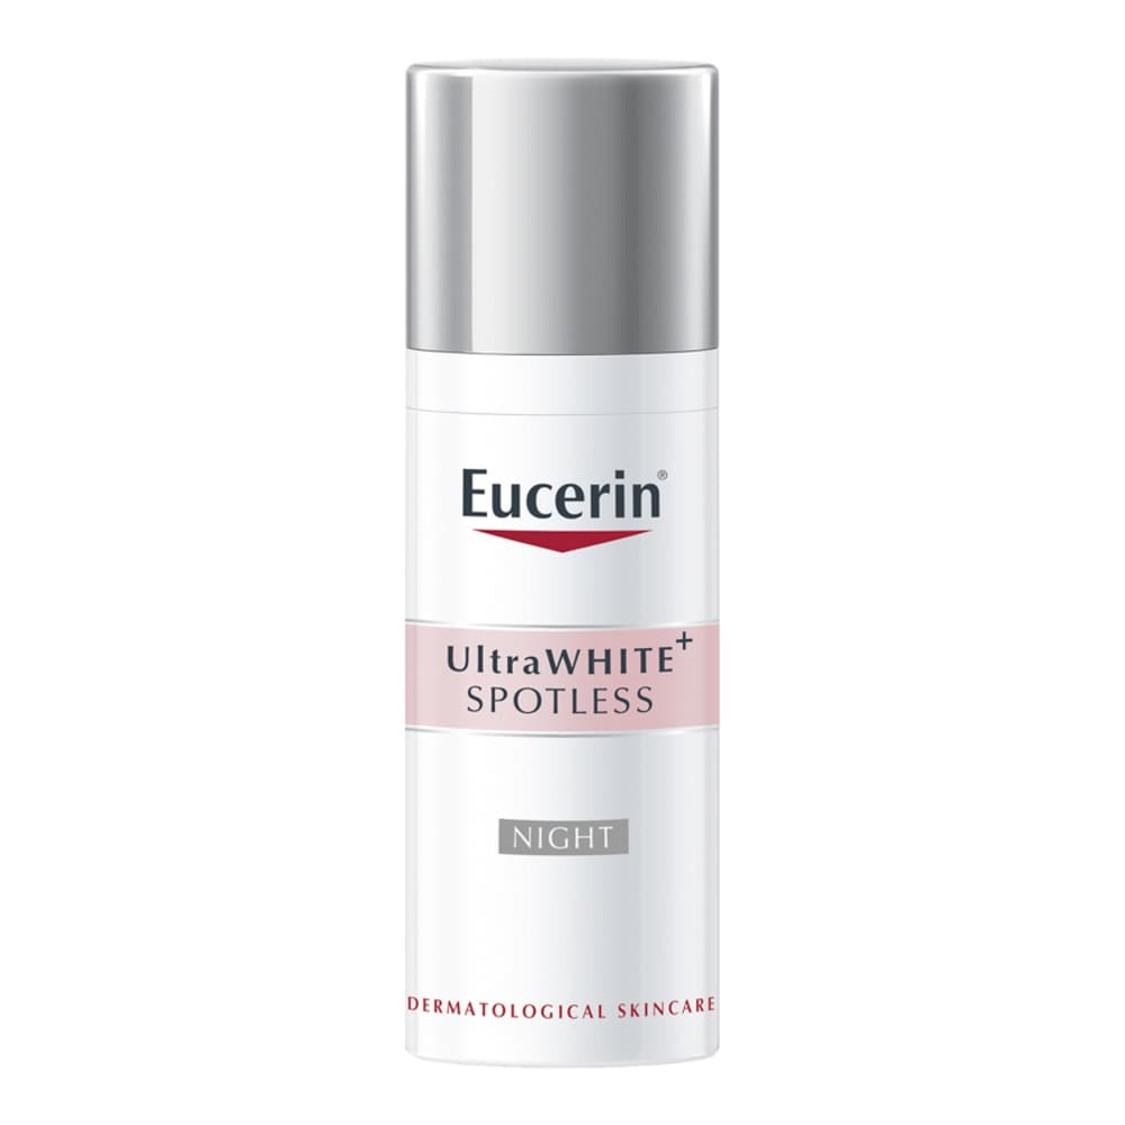 Eucerin Ultrawhite+ Spotless Spot Corrector Night Cream ยูเซอรีน อัลตร้าไวท์ พลัส สปอตเลส ไนท์ ฟลูอิด 50ml.